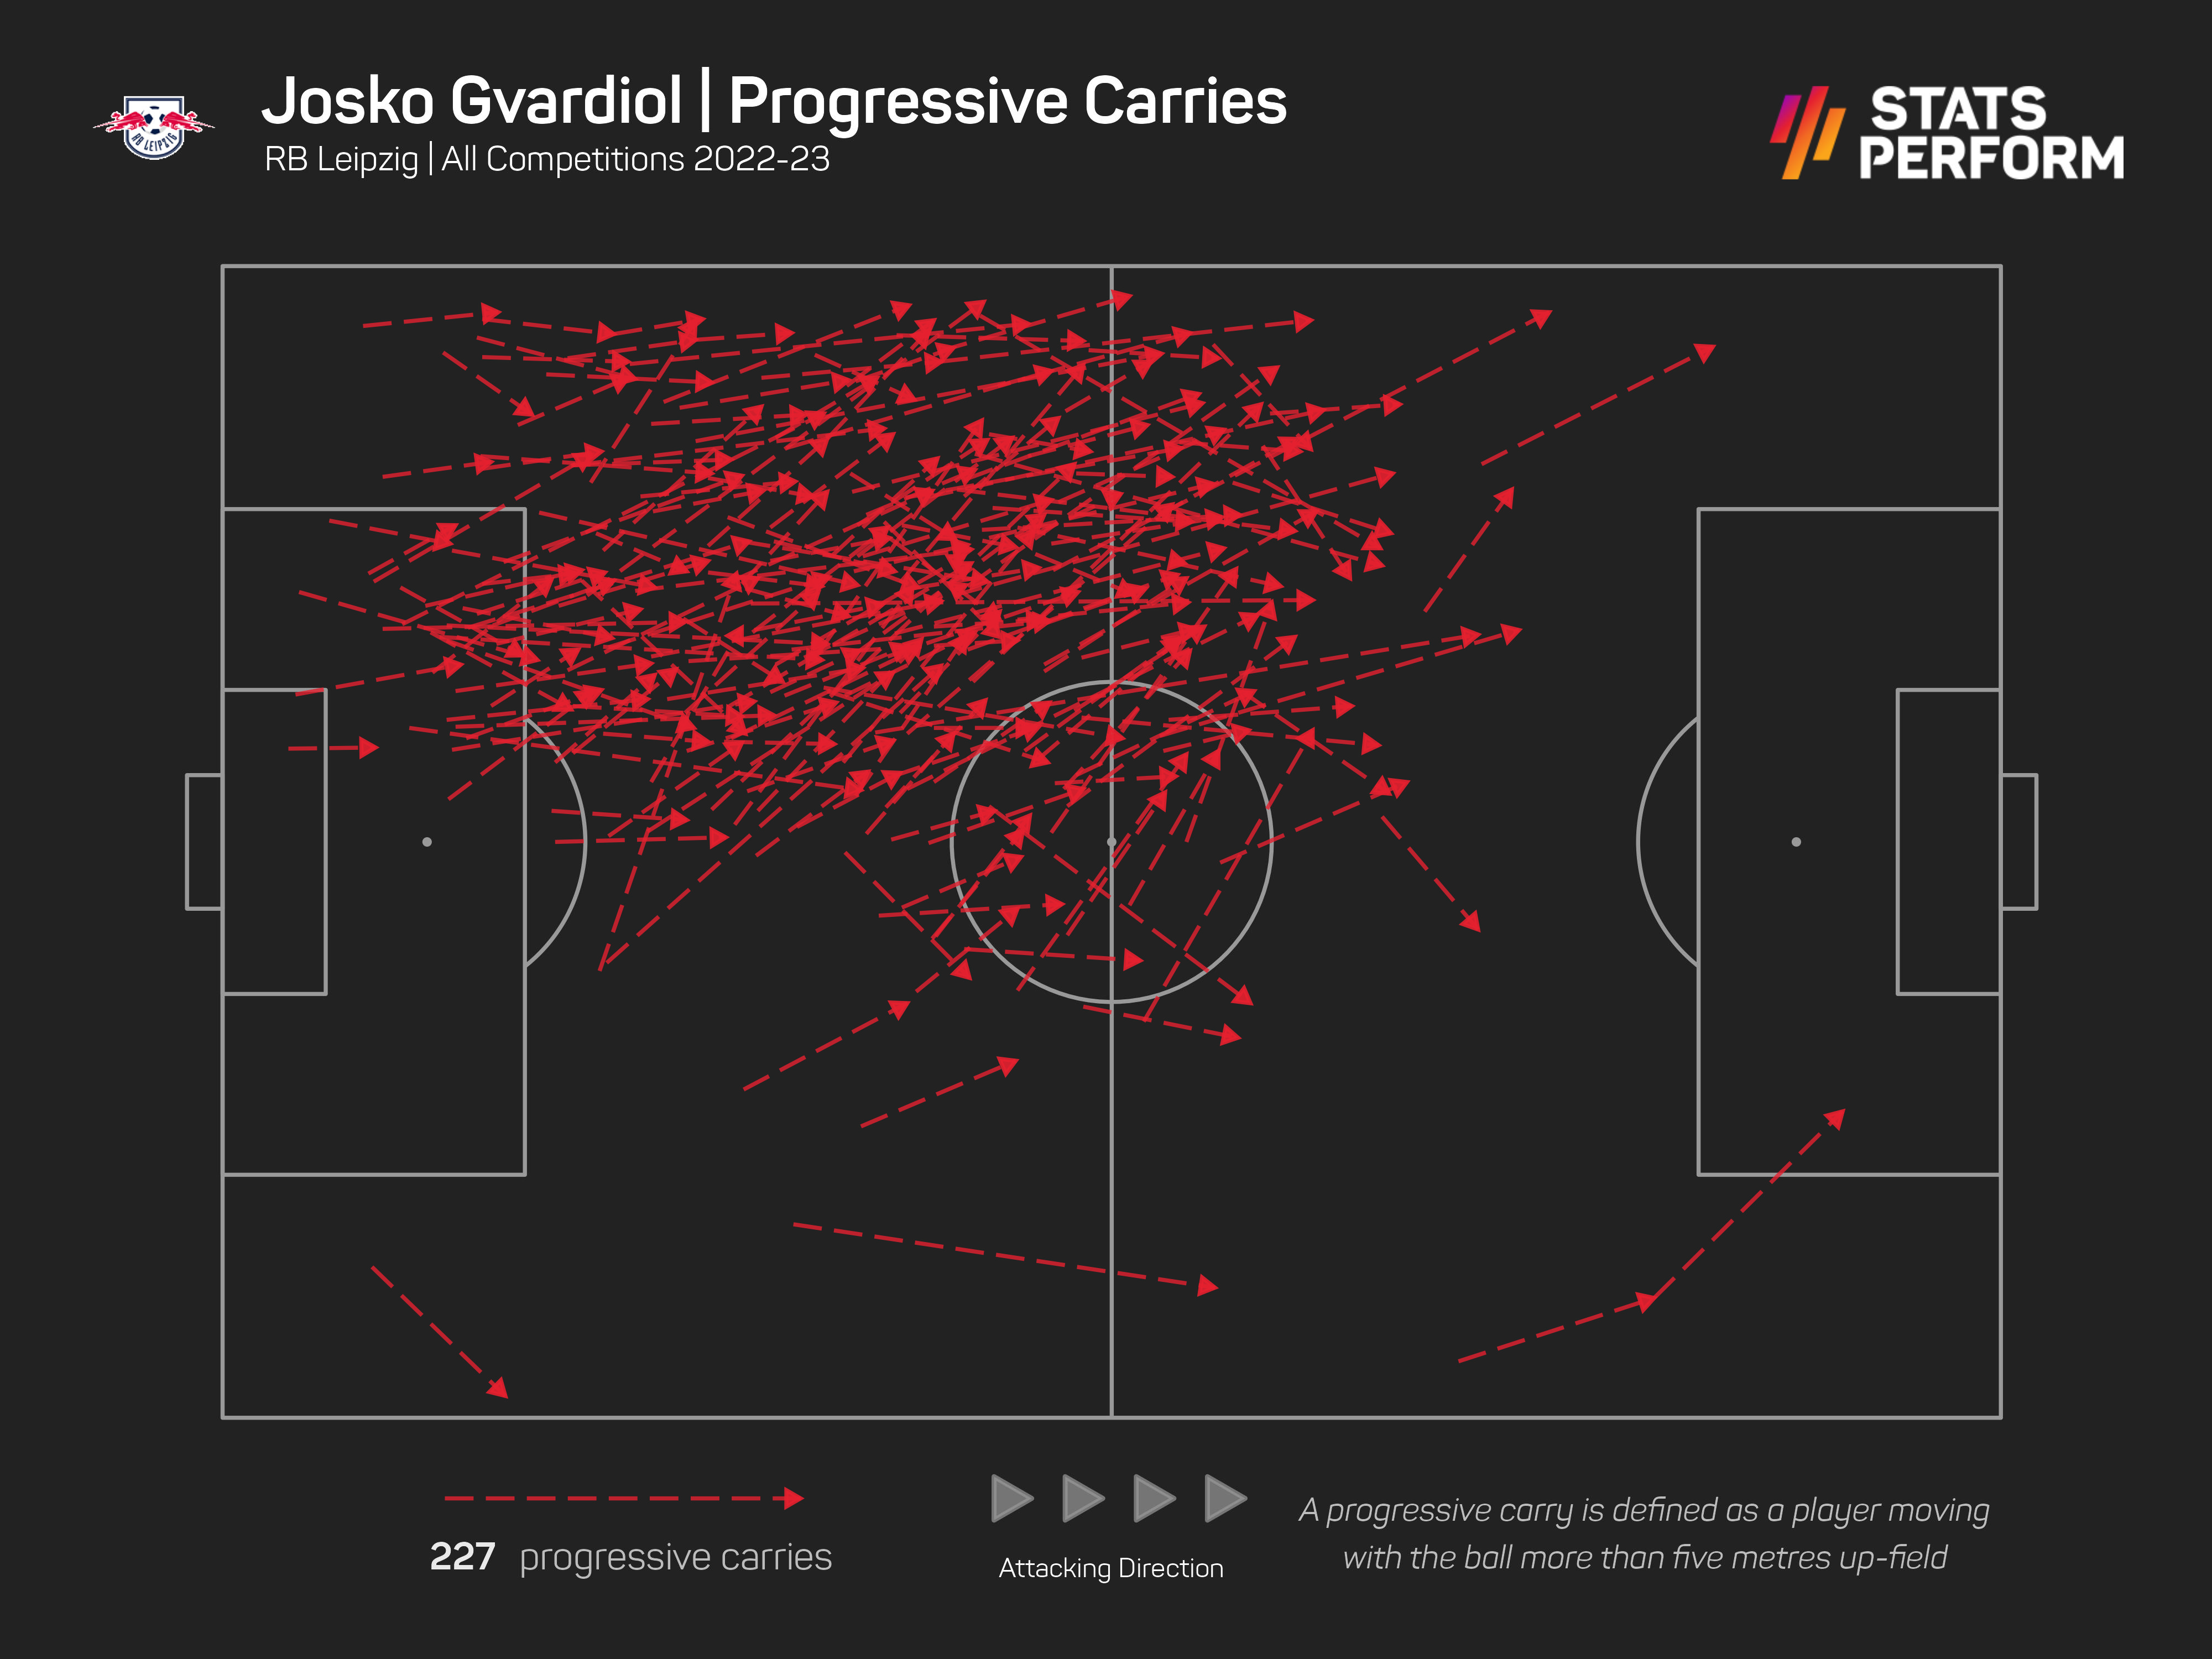 Josko Gvardiol is a key ball carrier for RB Leipzig